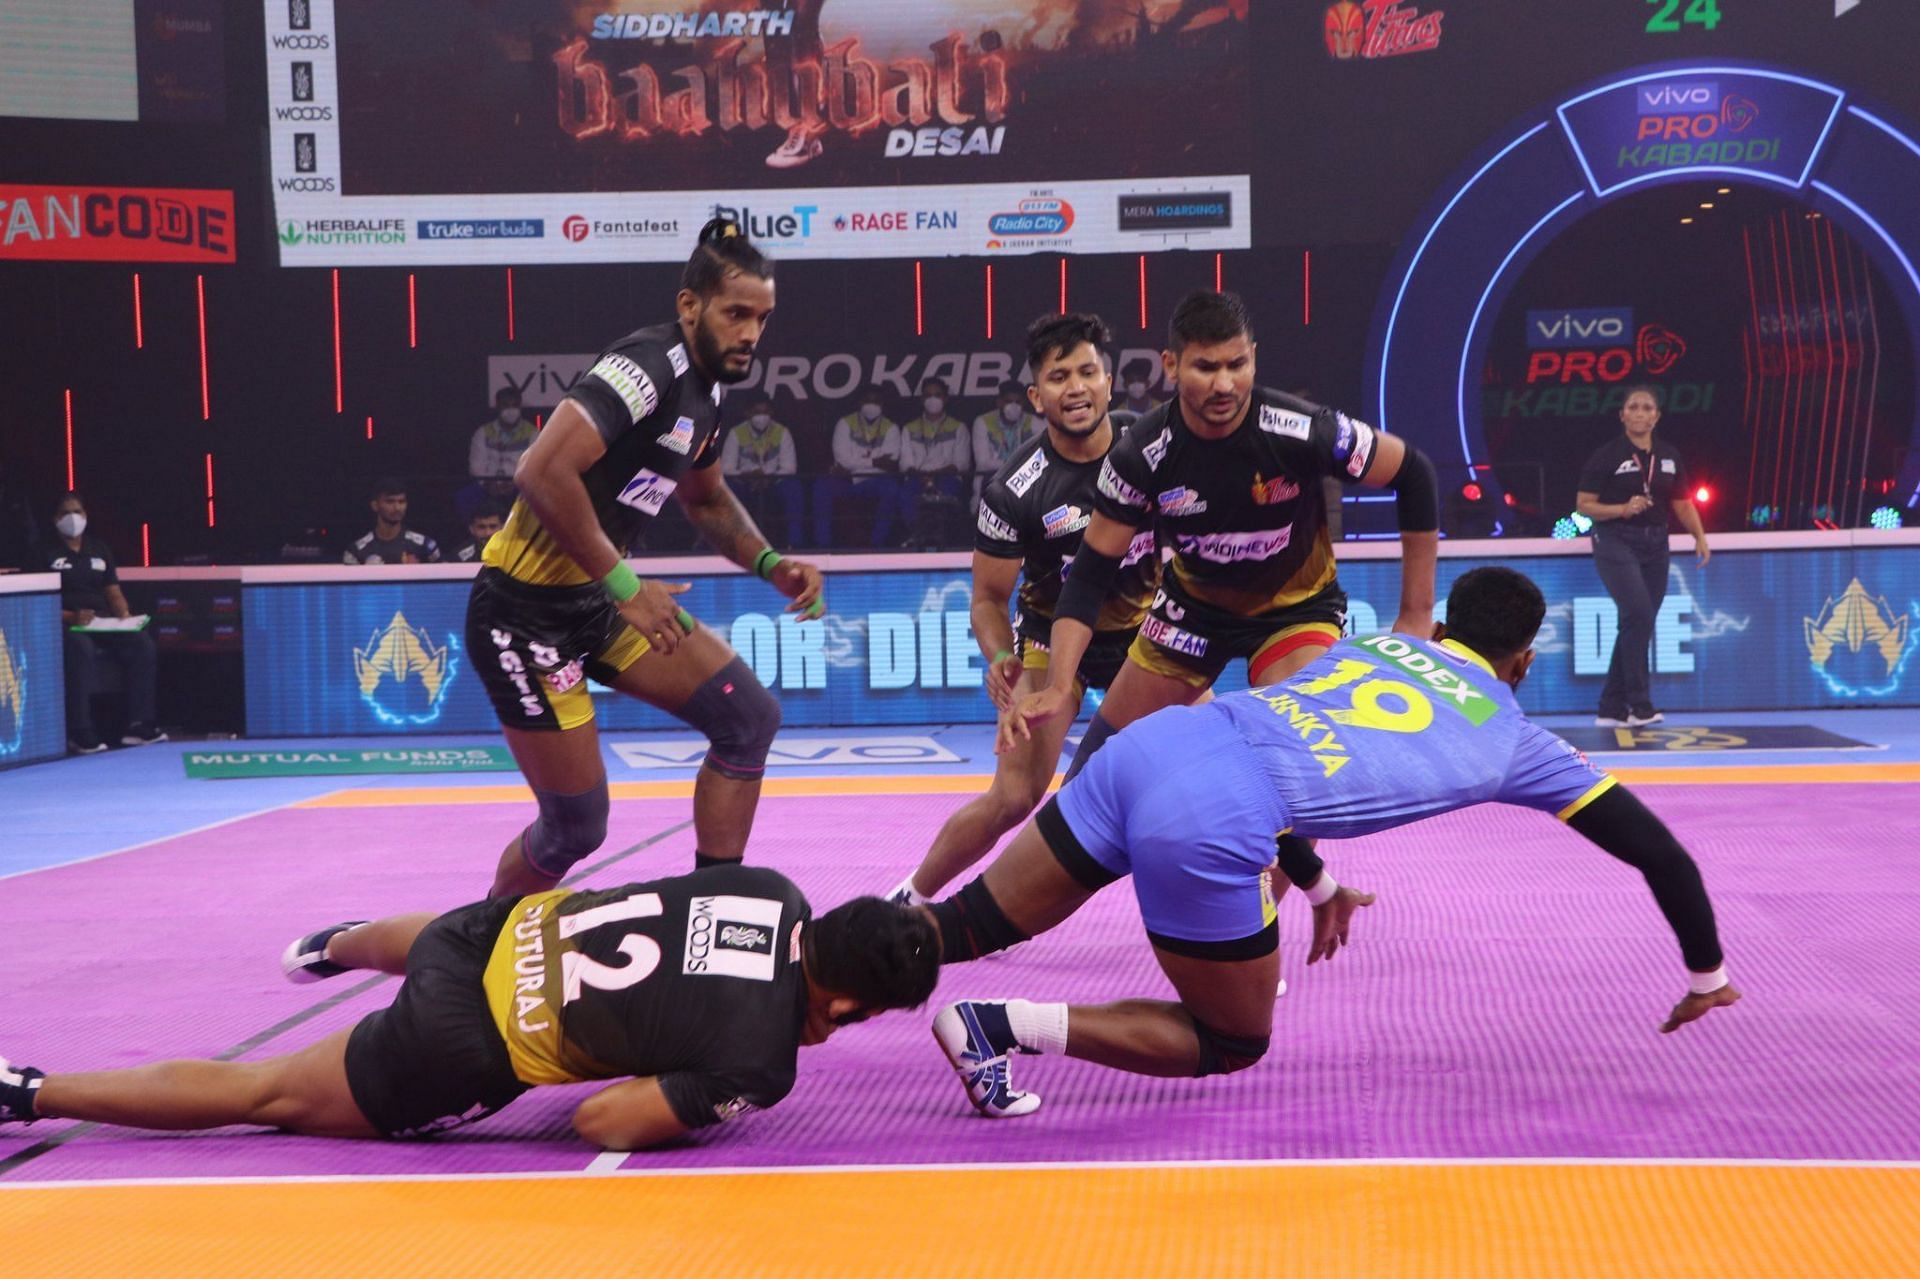 The Telugu Titans player tackles Tamil Thalaivas raider Ajinkya - Image Courtesy: Telugu Titans Twitter